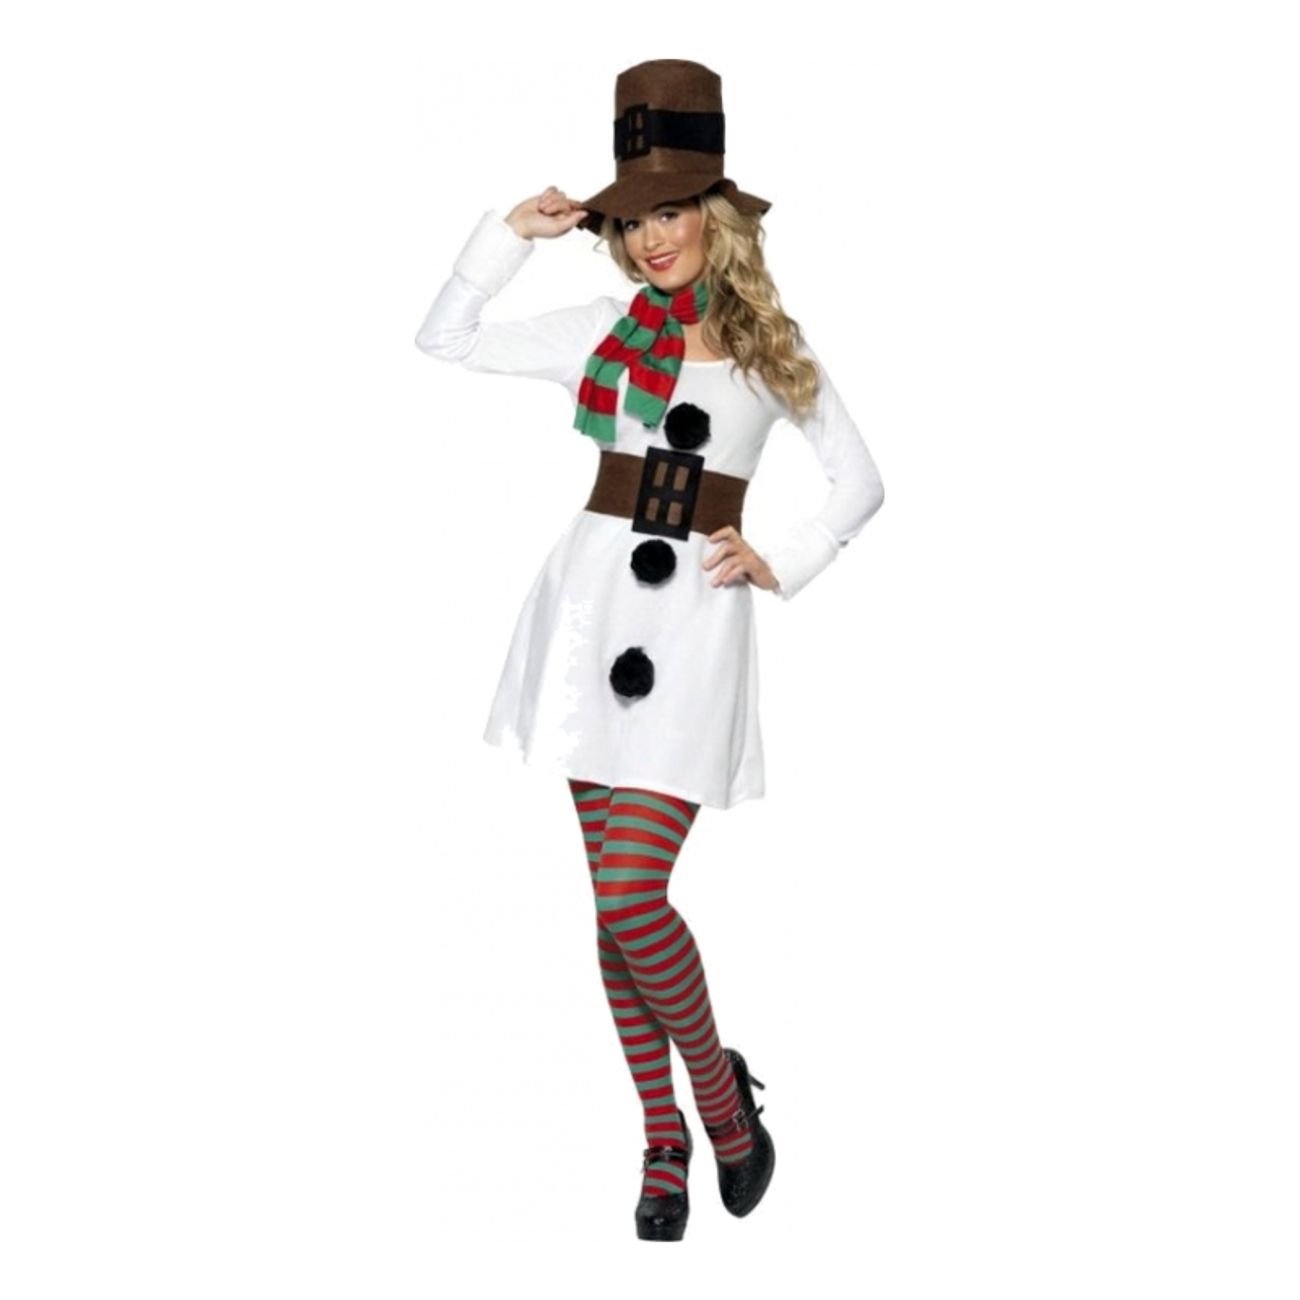 miss-snowman-costume-1